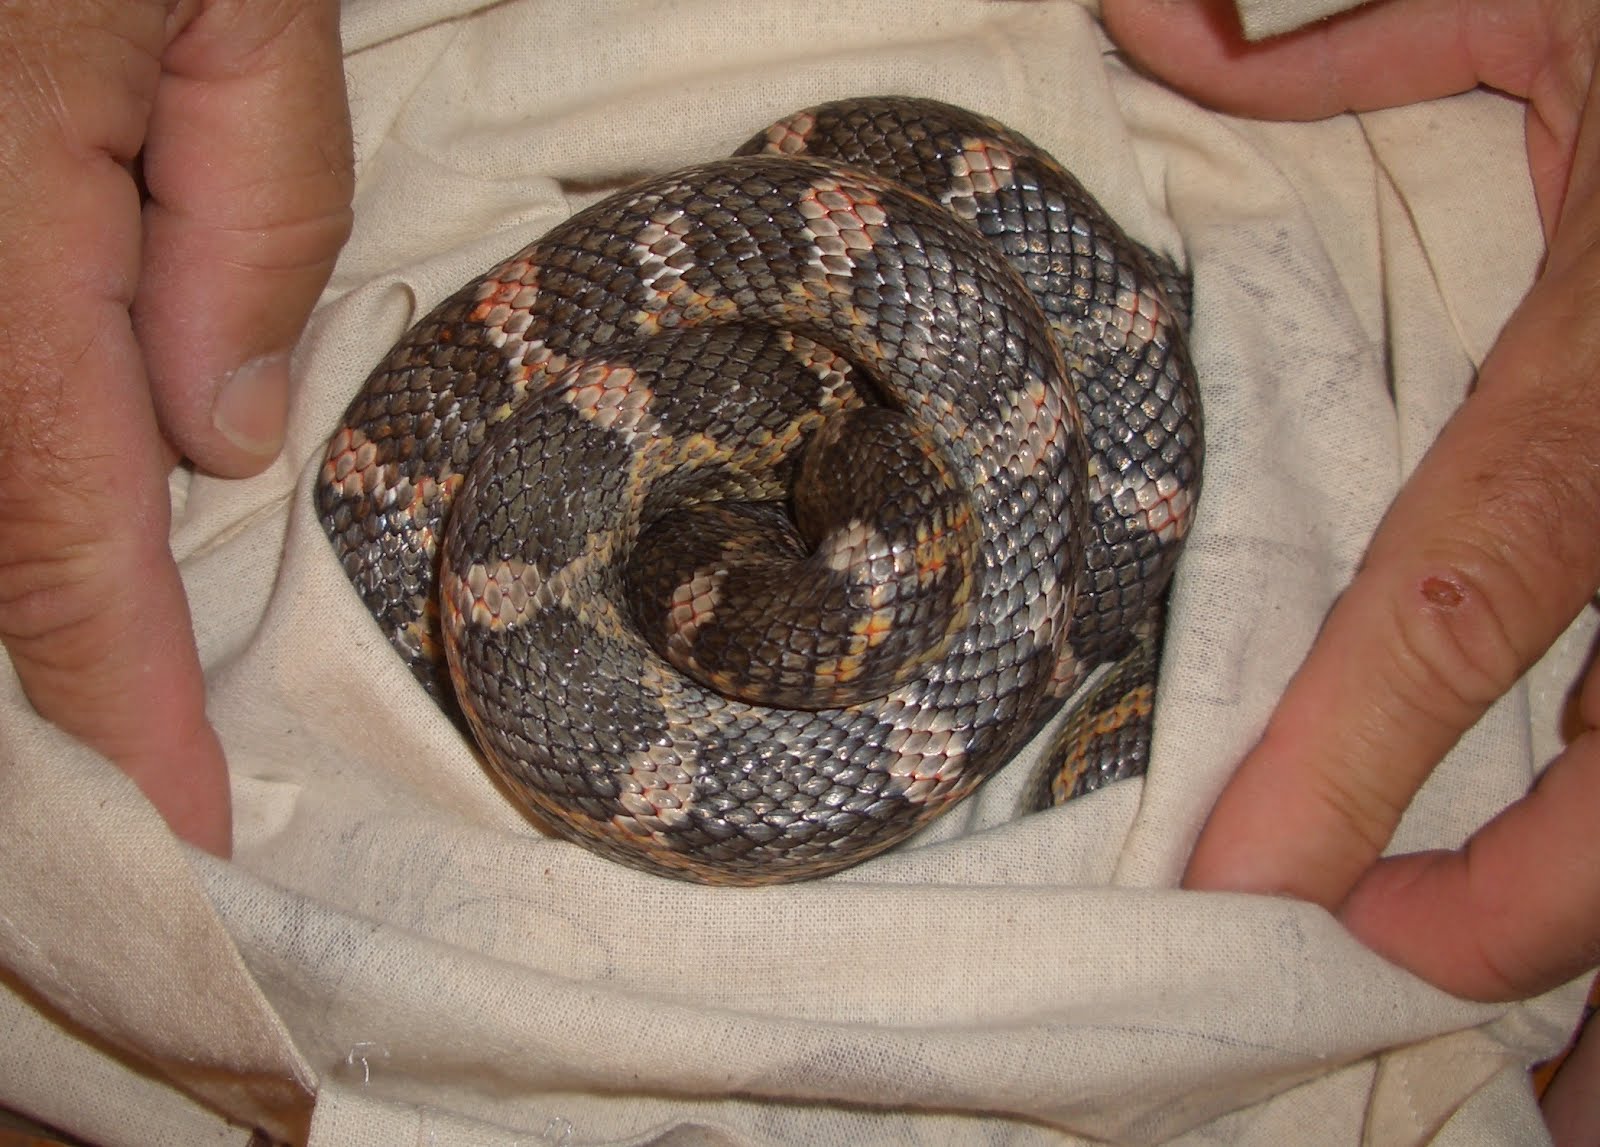 SEE TRAIL: Texas Rat Snake dilemma